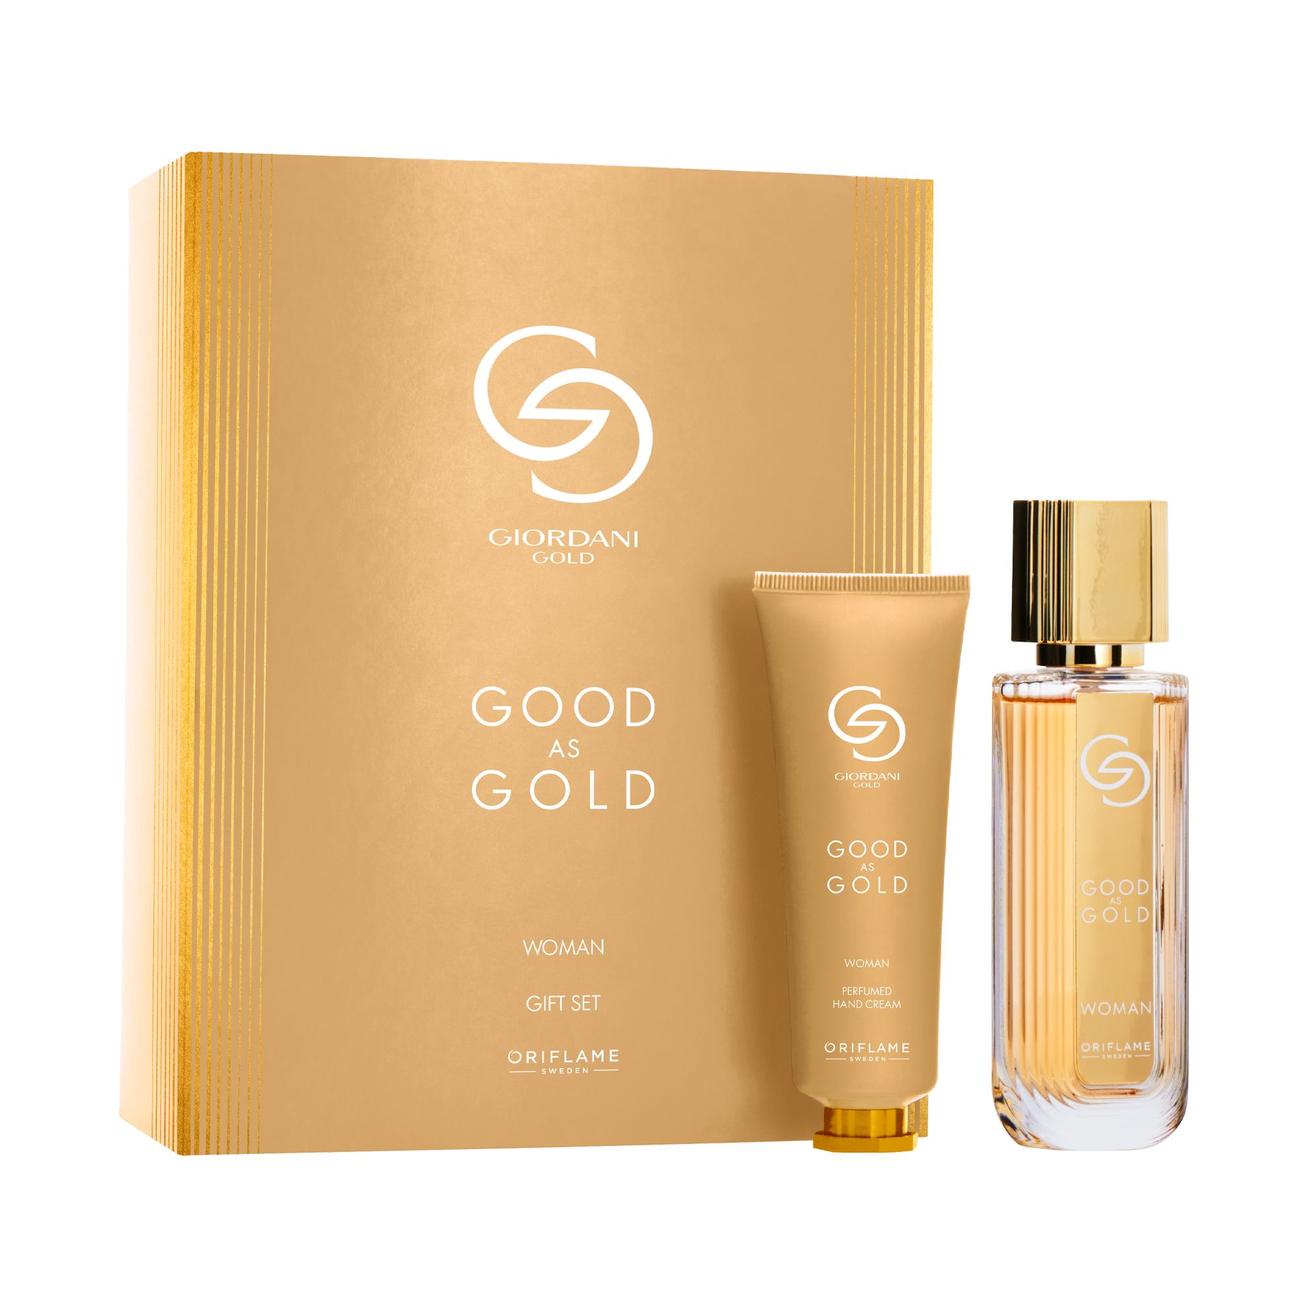 Tilbud: Good as Gold Woman Gift Set kr 769 på Oriflame